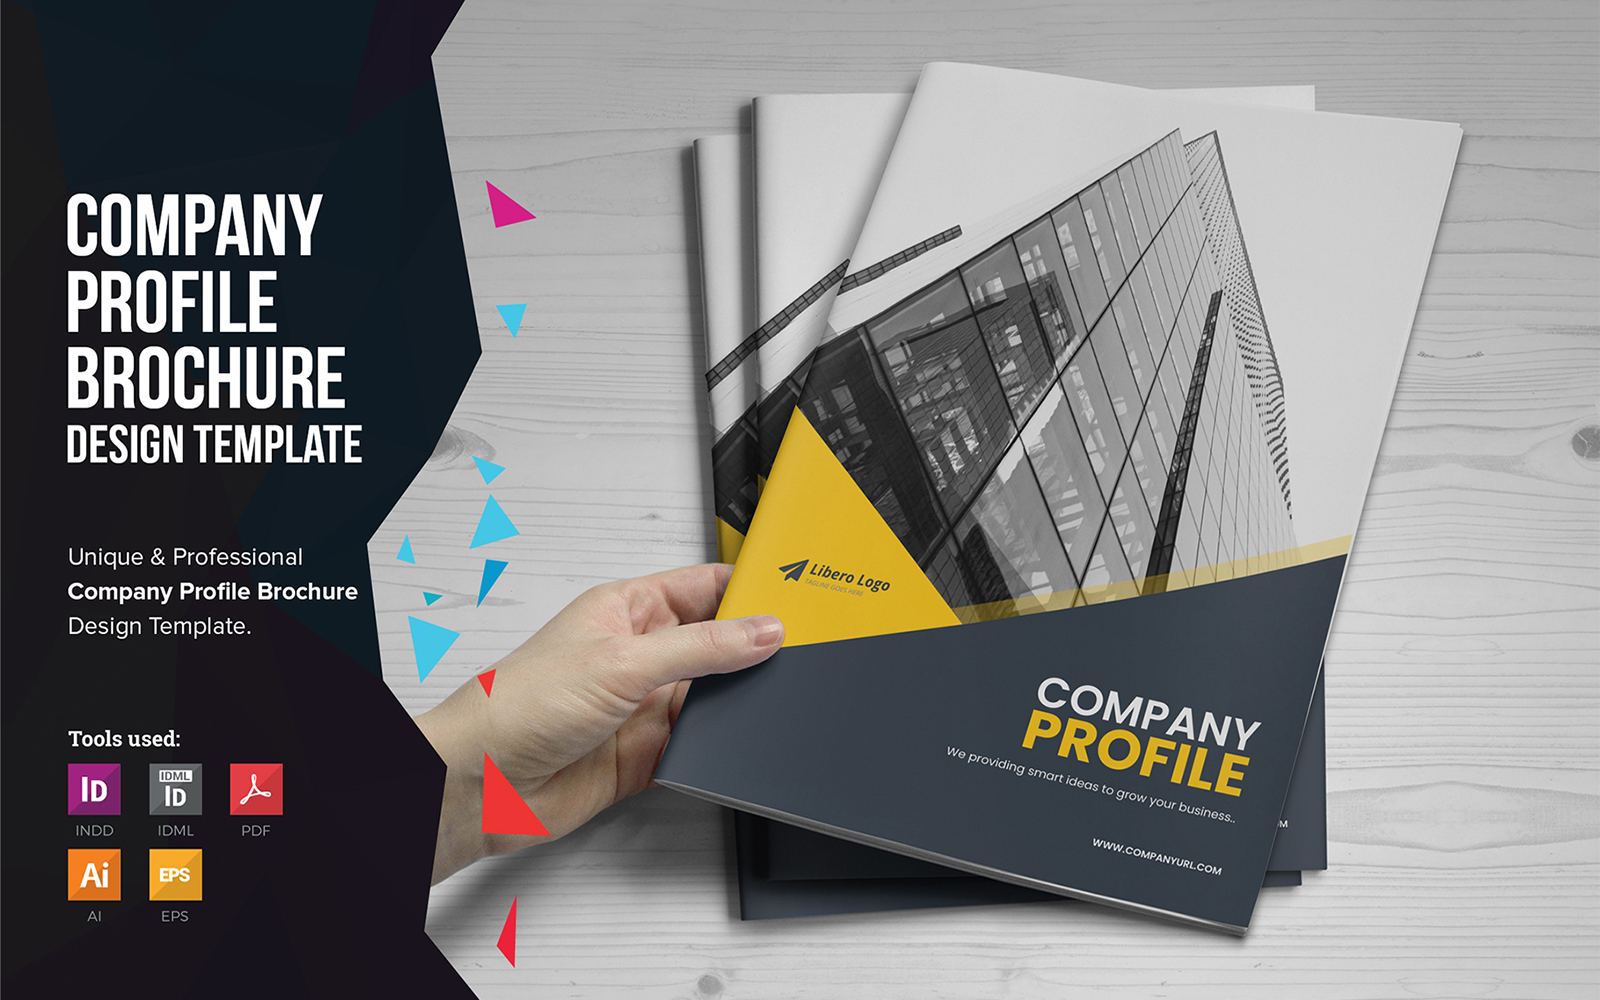 Carol - Company Profile Brochure - Corporate Identity Template